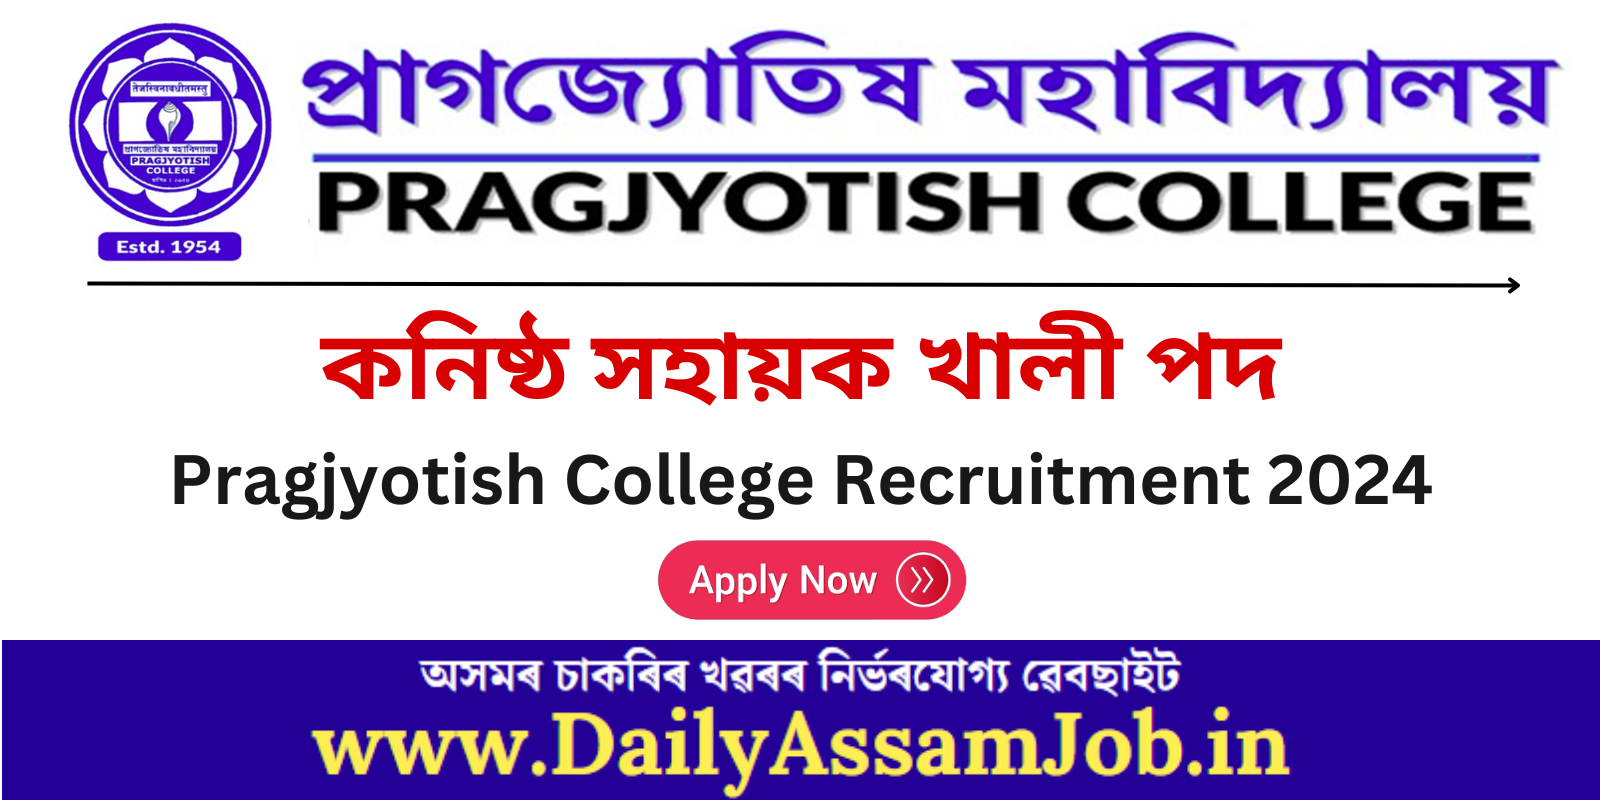 Pragjyotish College Recruitment 2024 for 02 Junior Assistant Vacancy